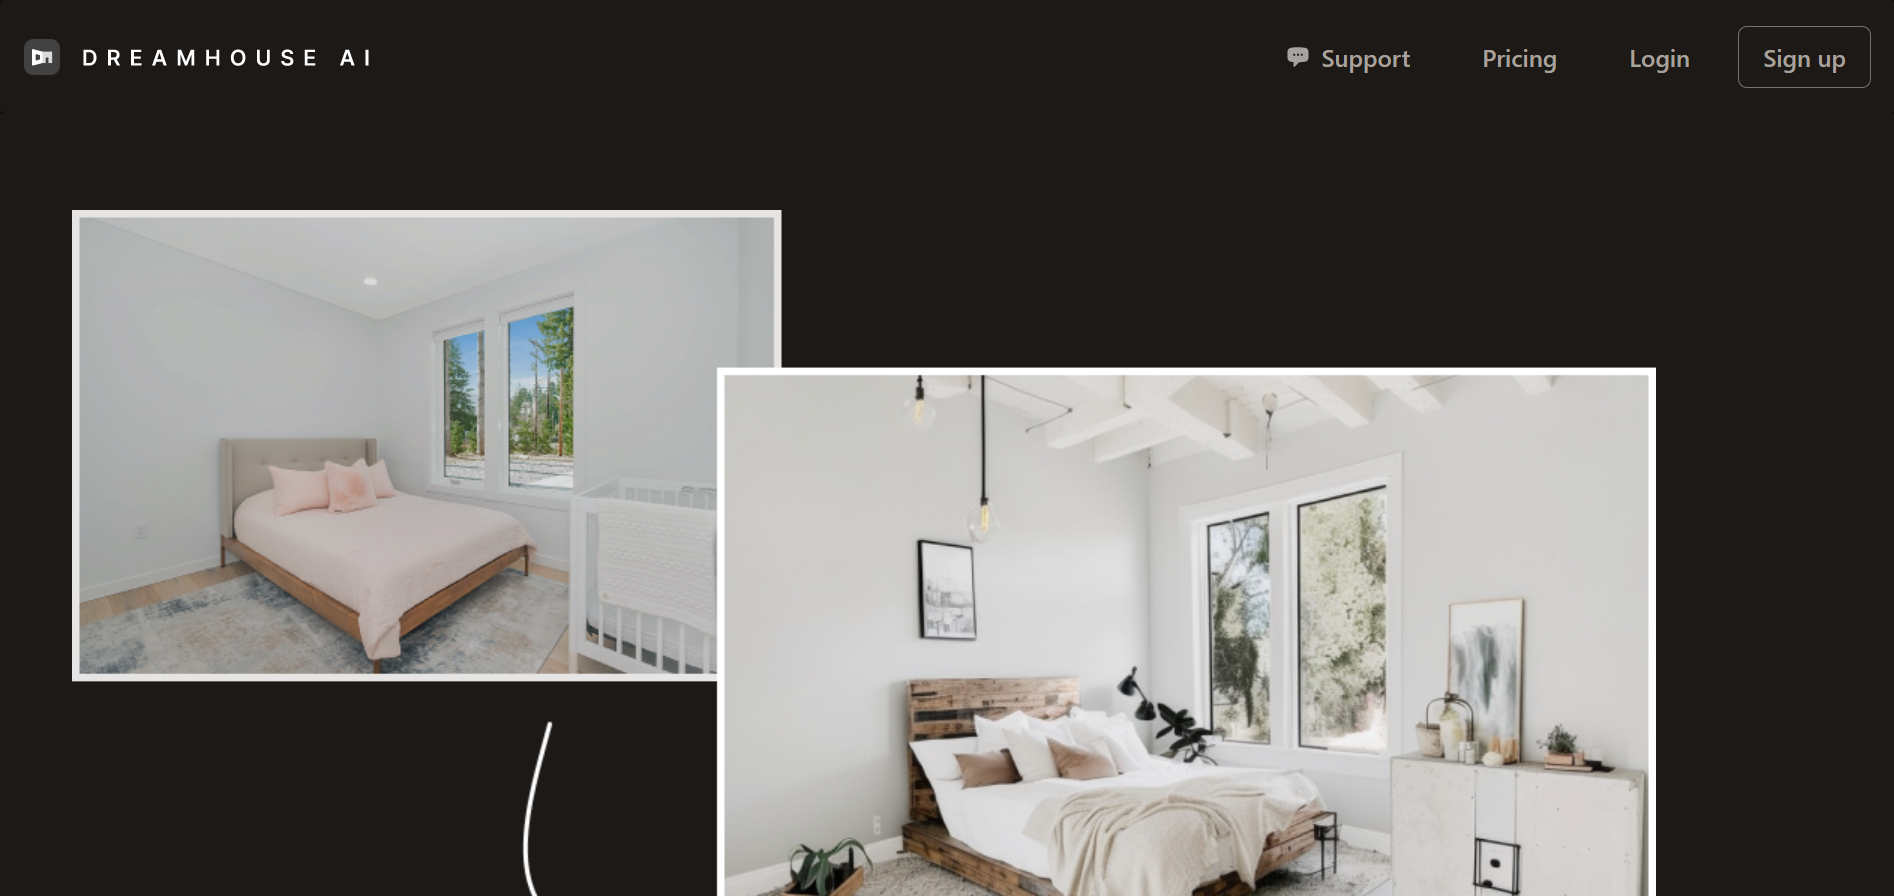 Dreamhouseai.com – The Ultimate Interior Design Tool for Creating Your Dream Home!